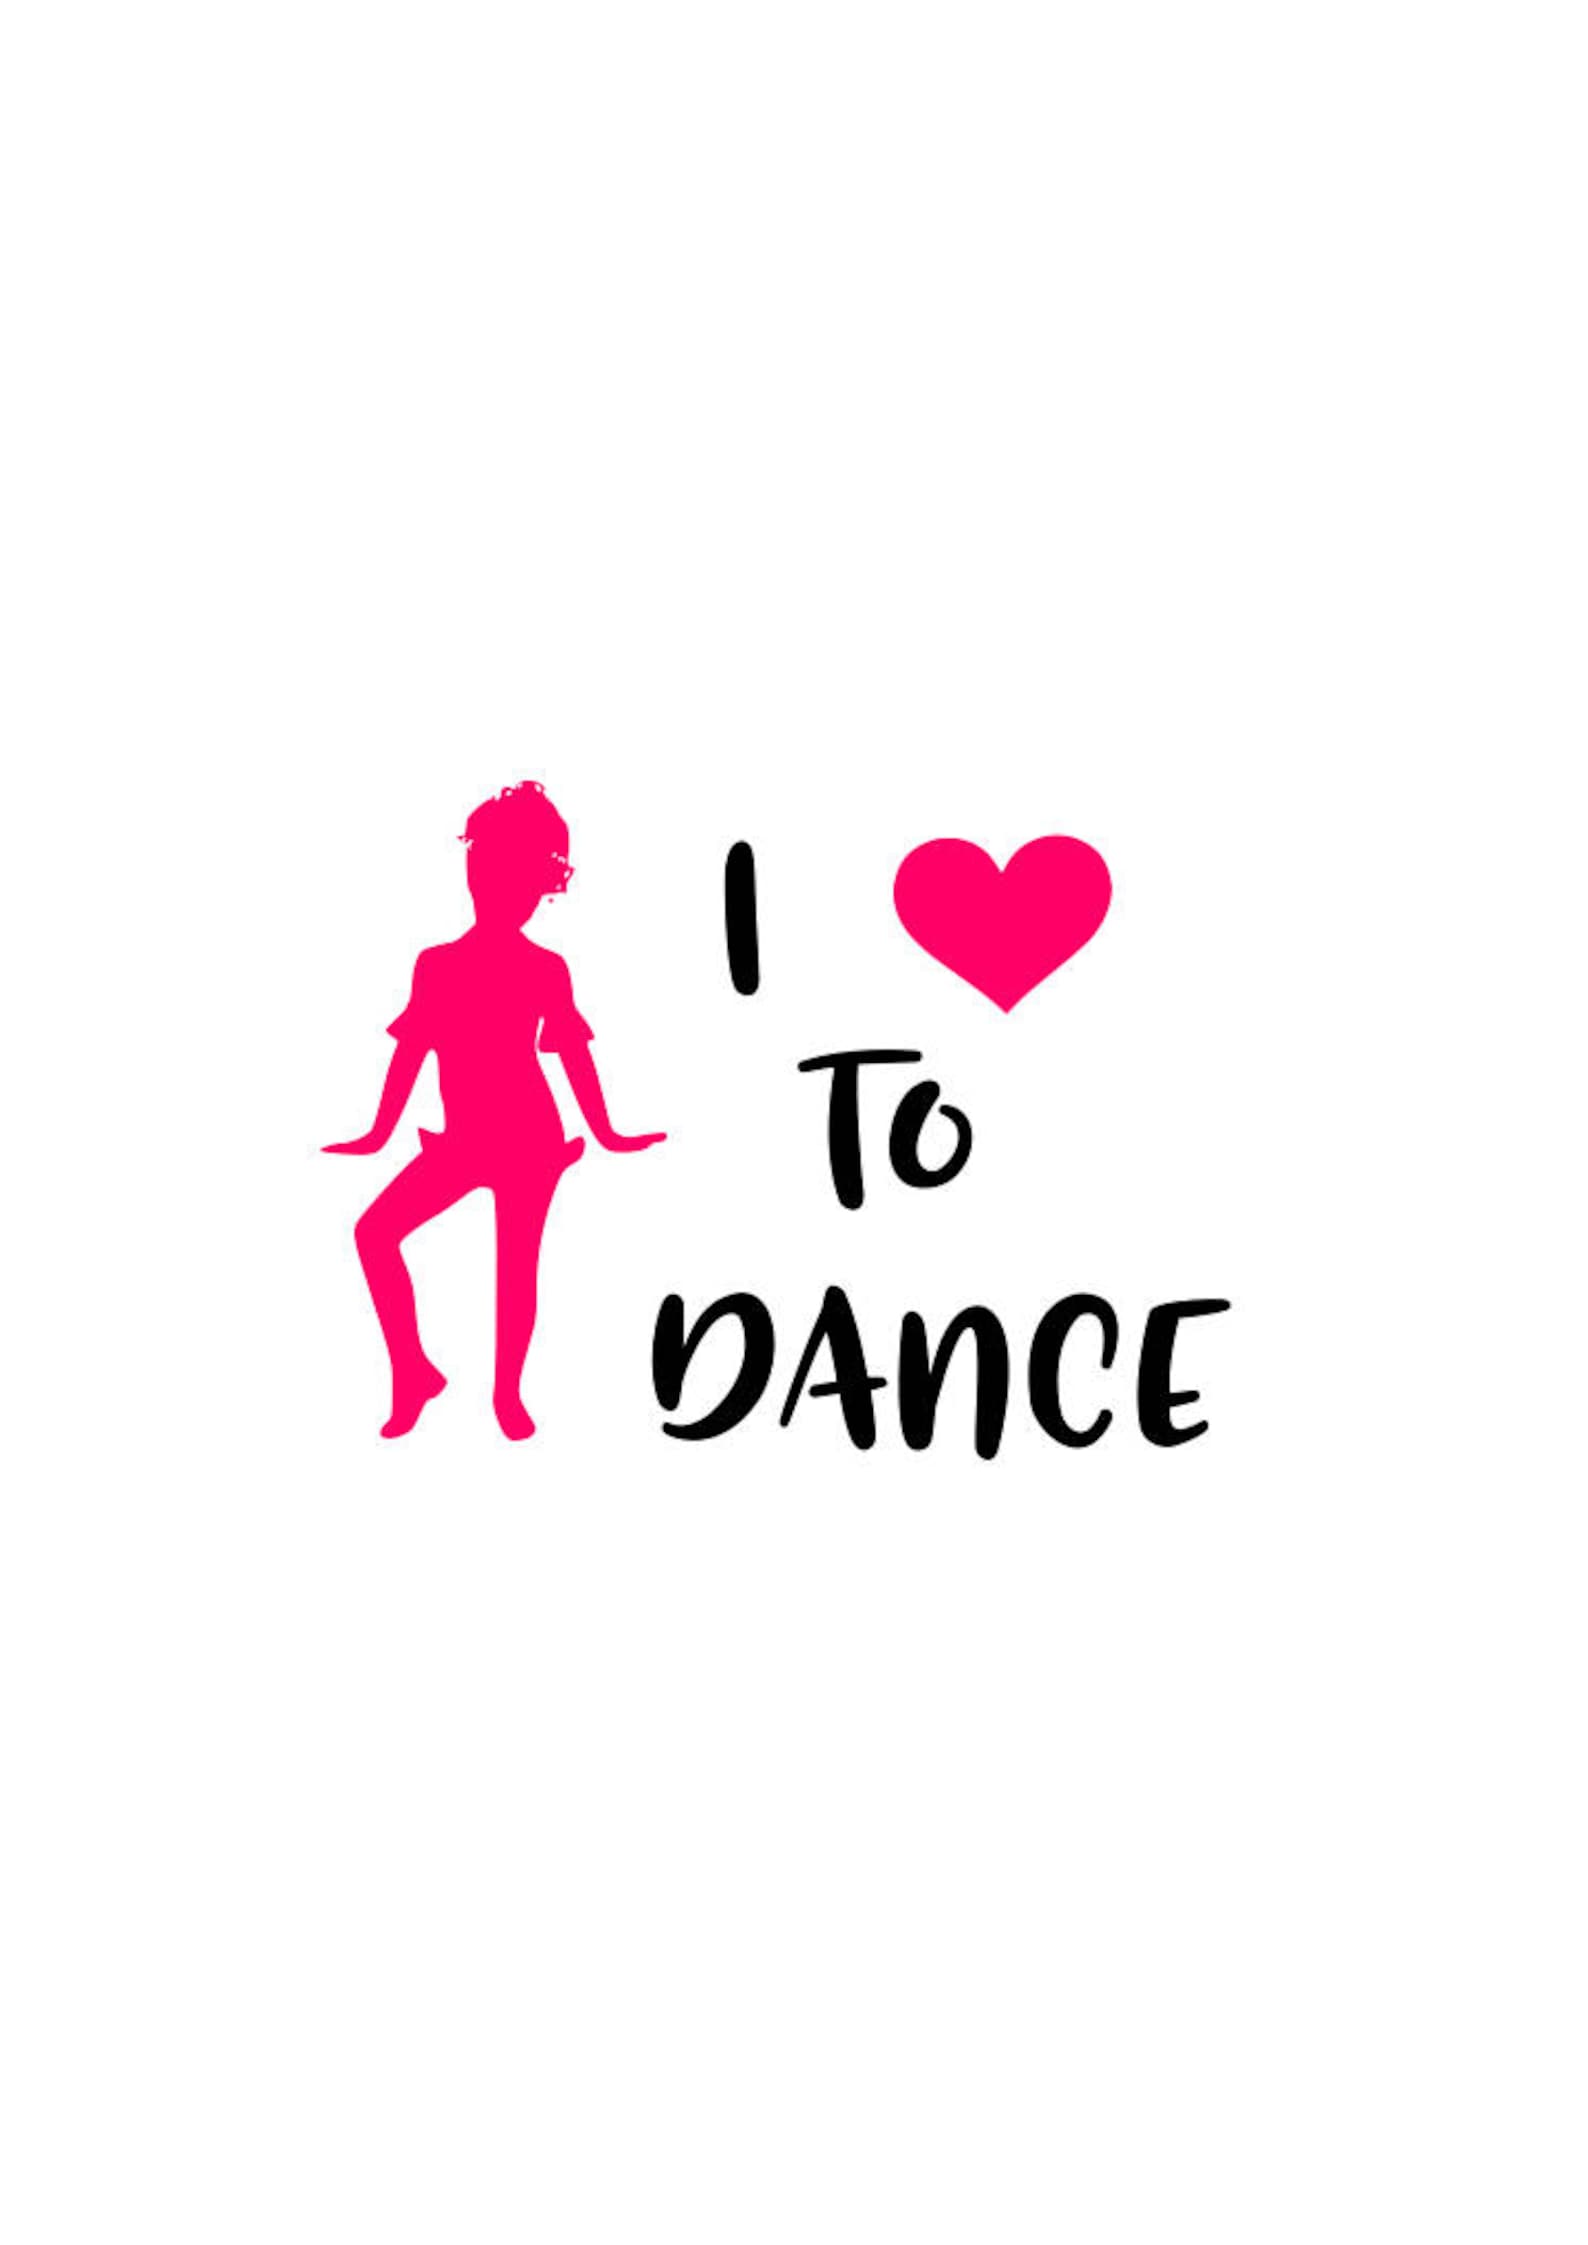 Dancing file. Я люблю танцы. I Love Dance французская. Картинка i Love Dance. Я люблю танцевать картинки.